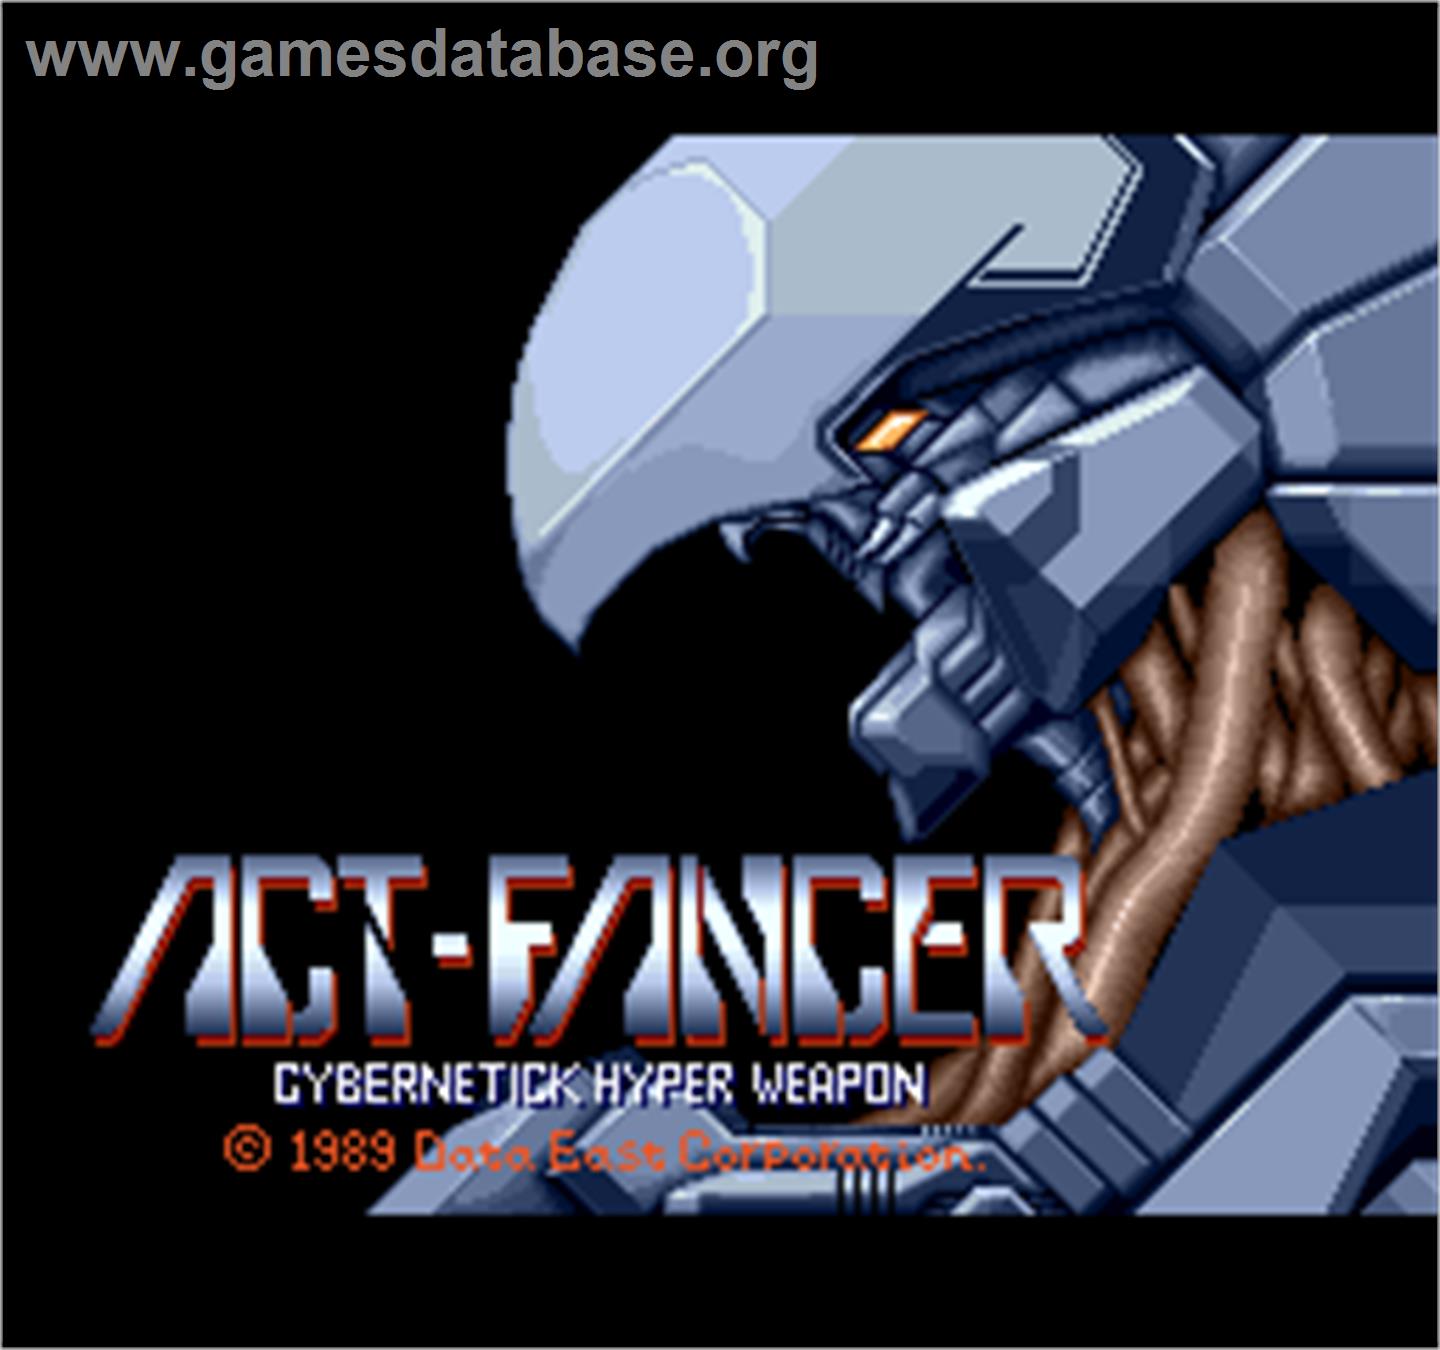 Act-Fancer Cybernetick Hyper Weapon - Arcade - Artwork - Title Screen